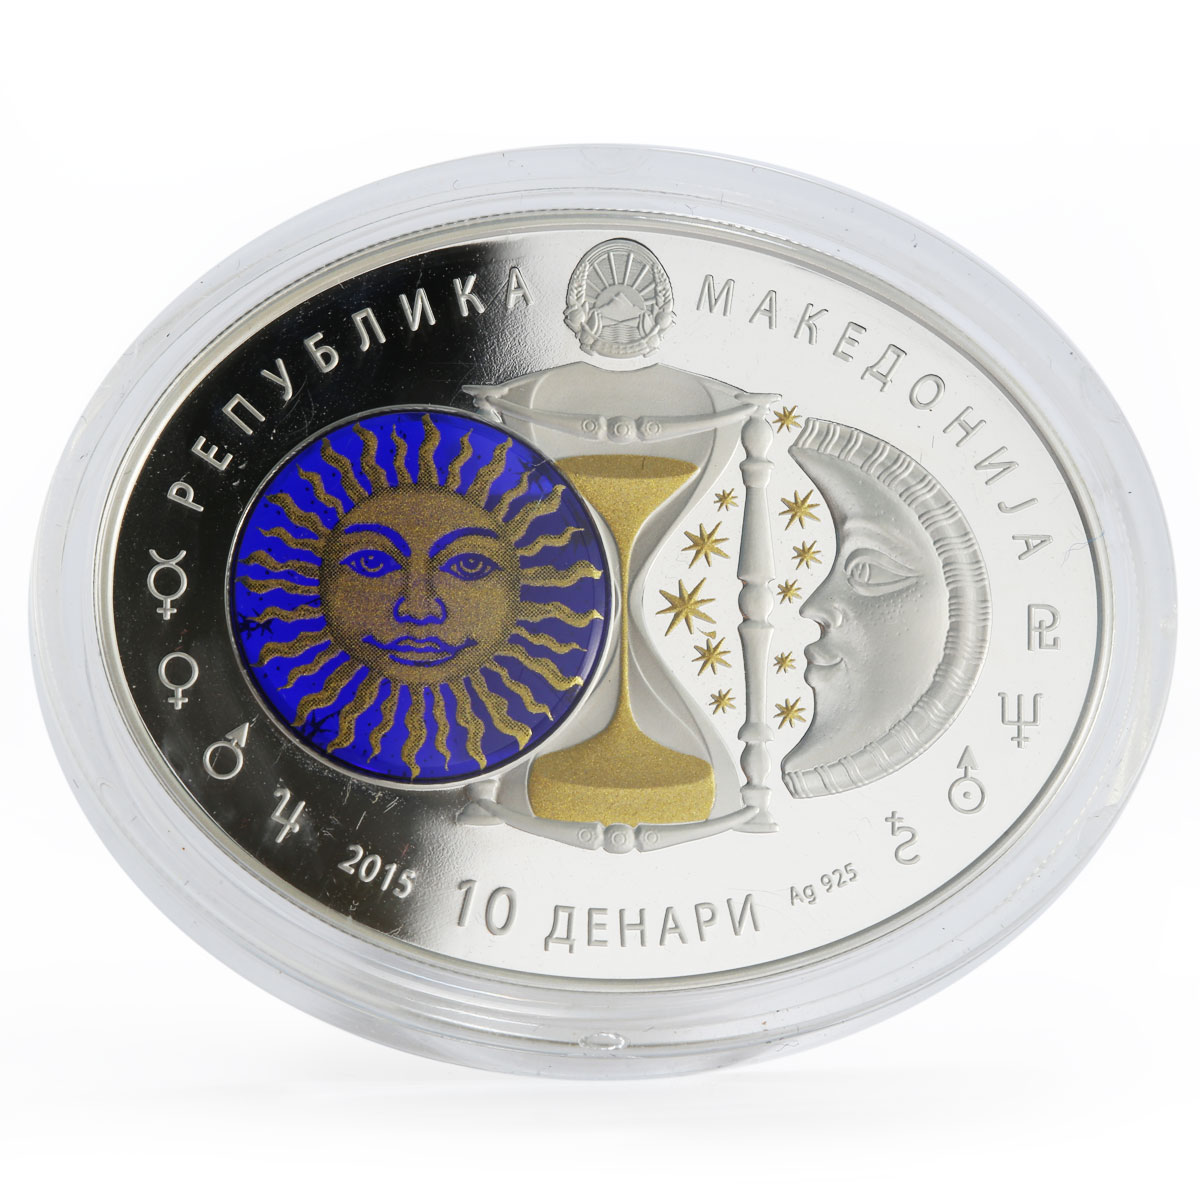 Macedonia 10 denari Zodiac Gemini 3D printing gilded silver oval coin 2015